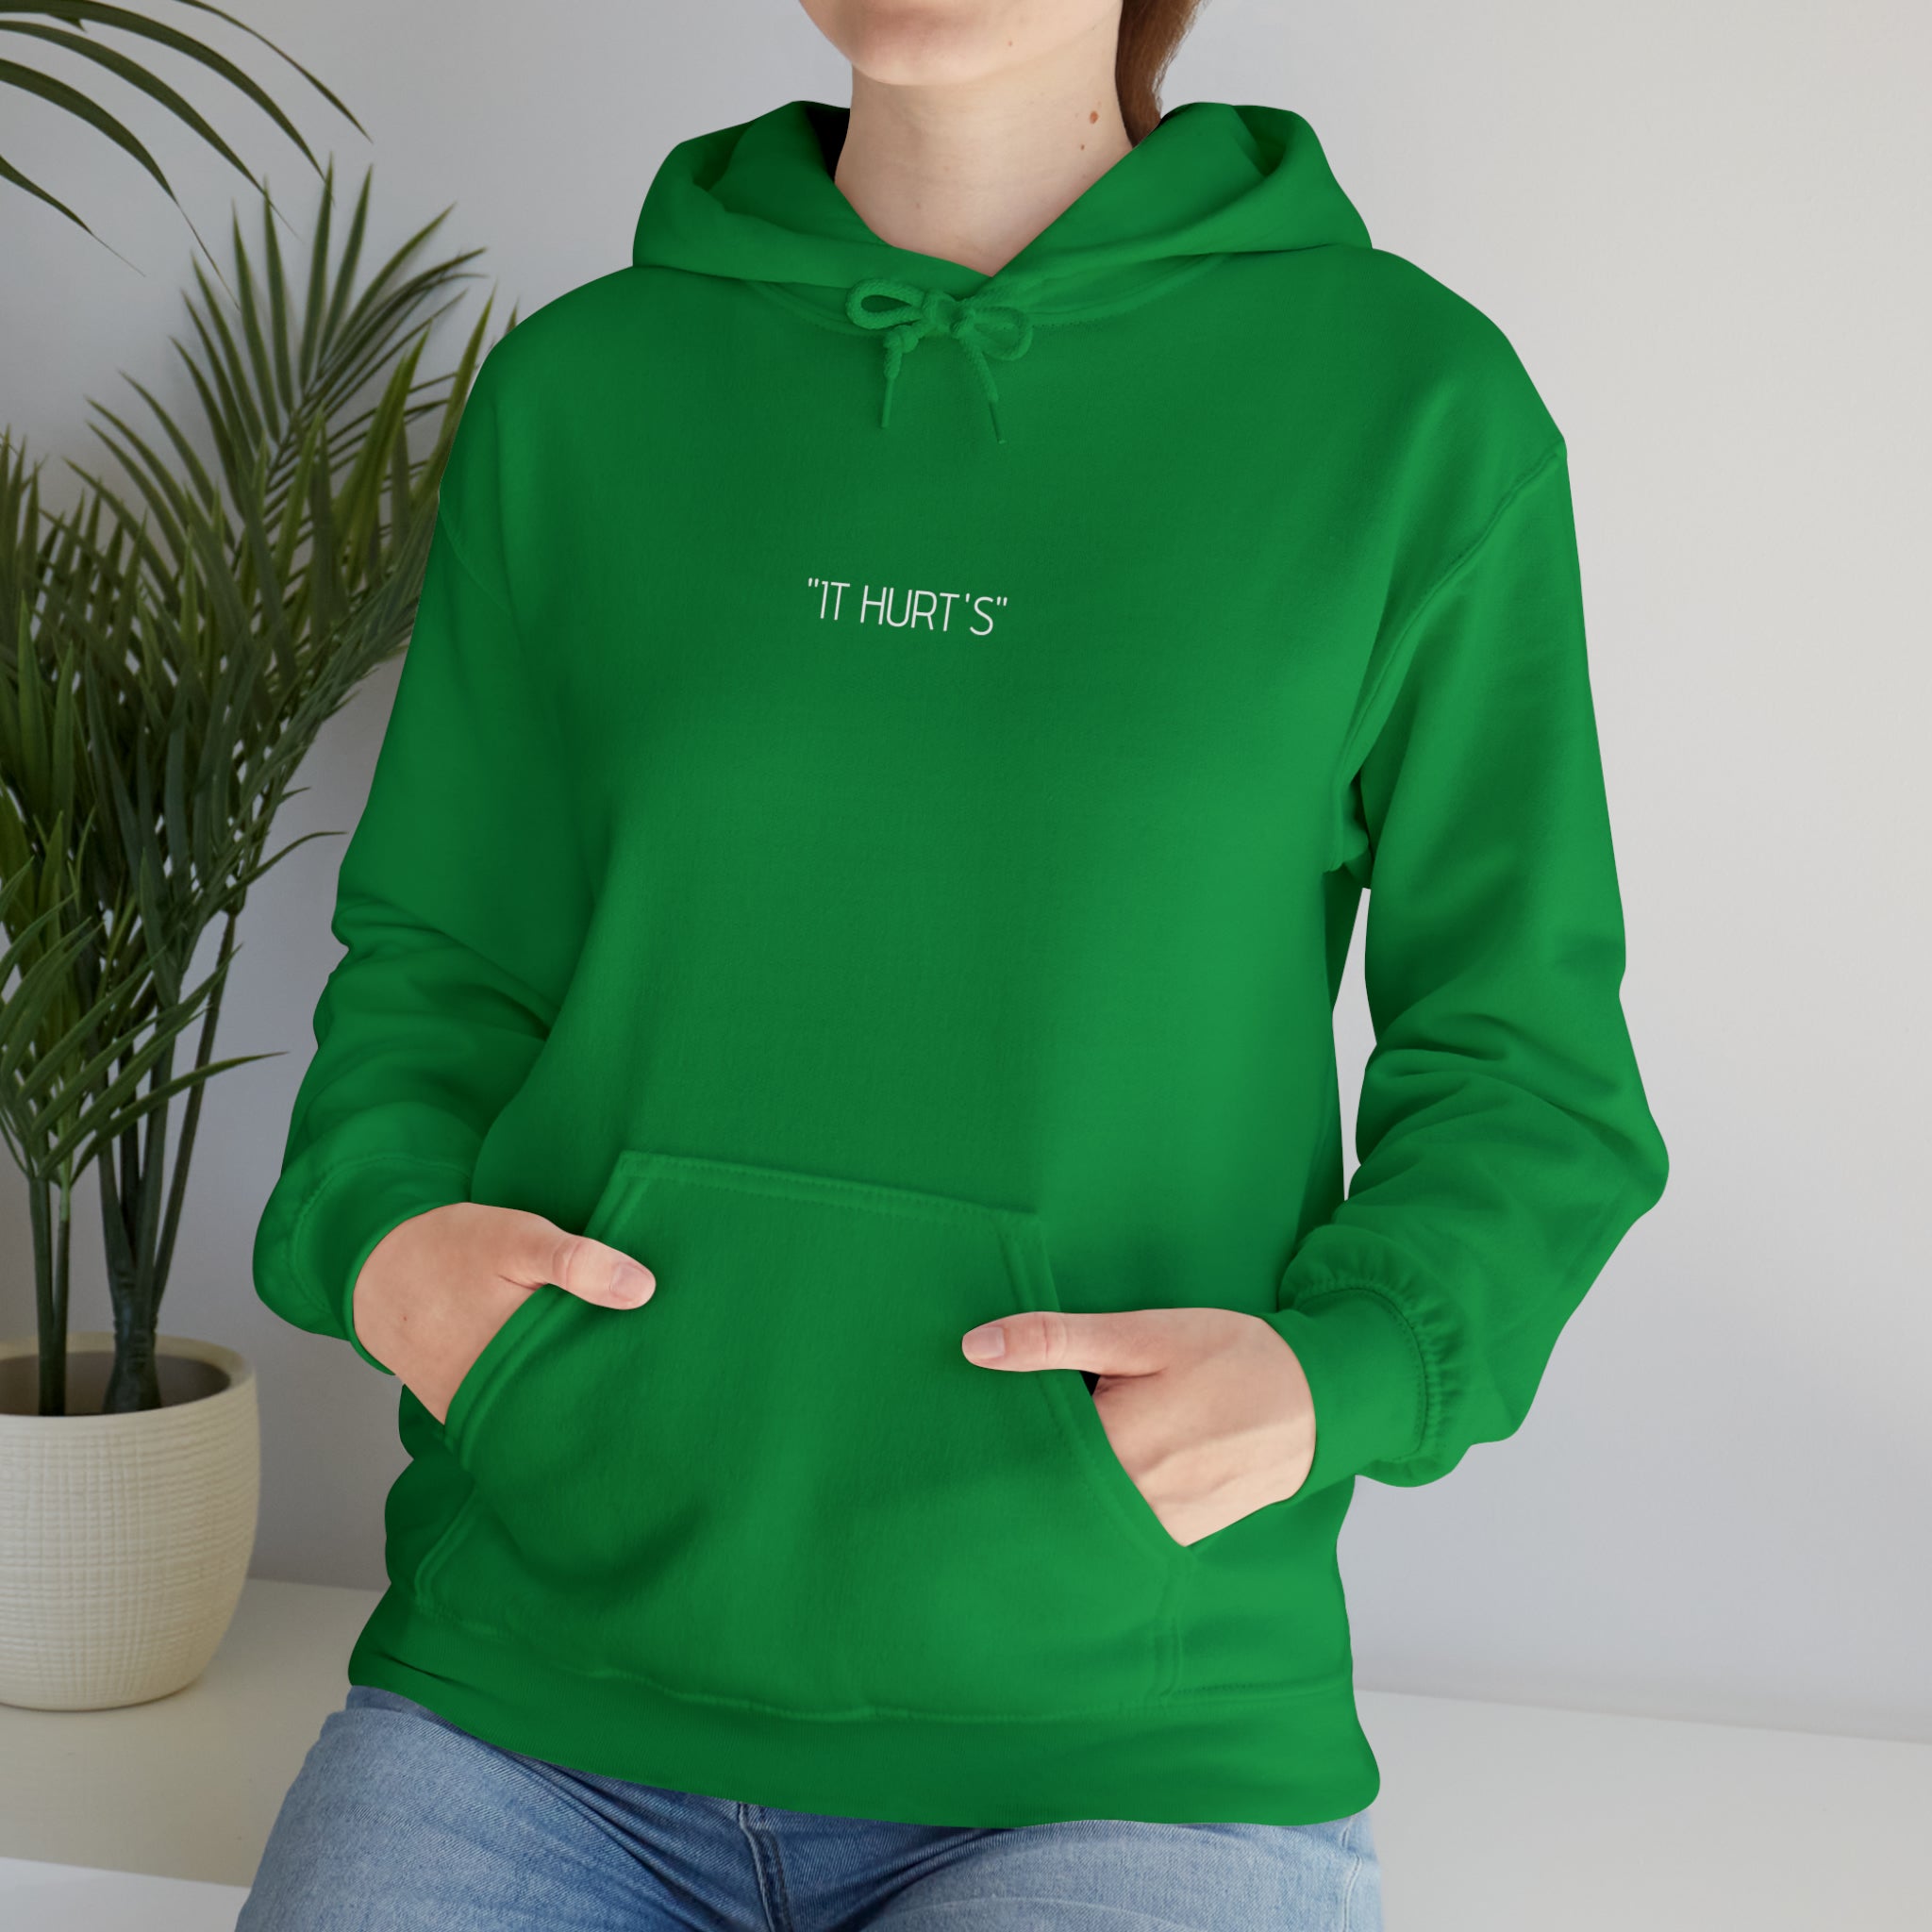 "IT HURT'S" motivational cotton hoodie